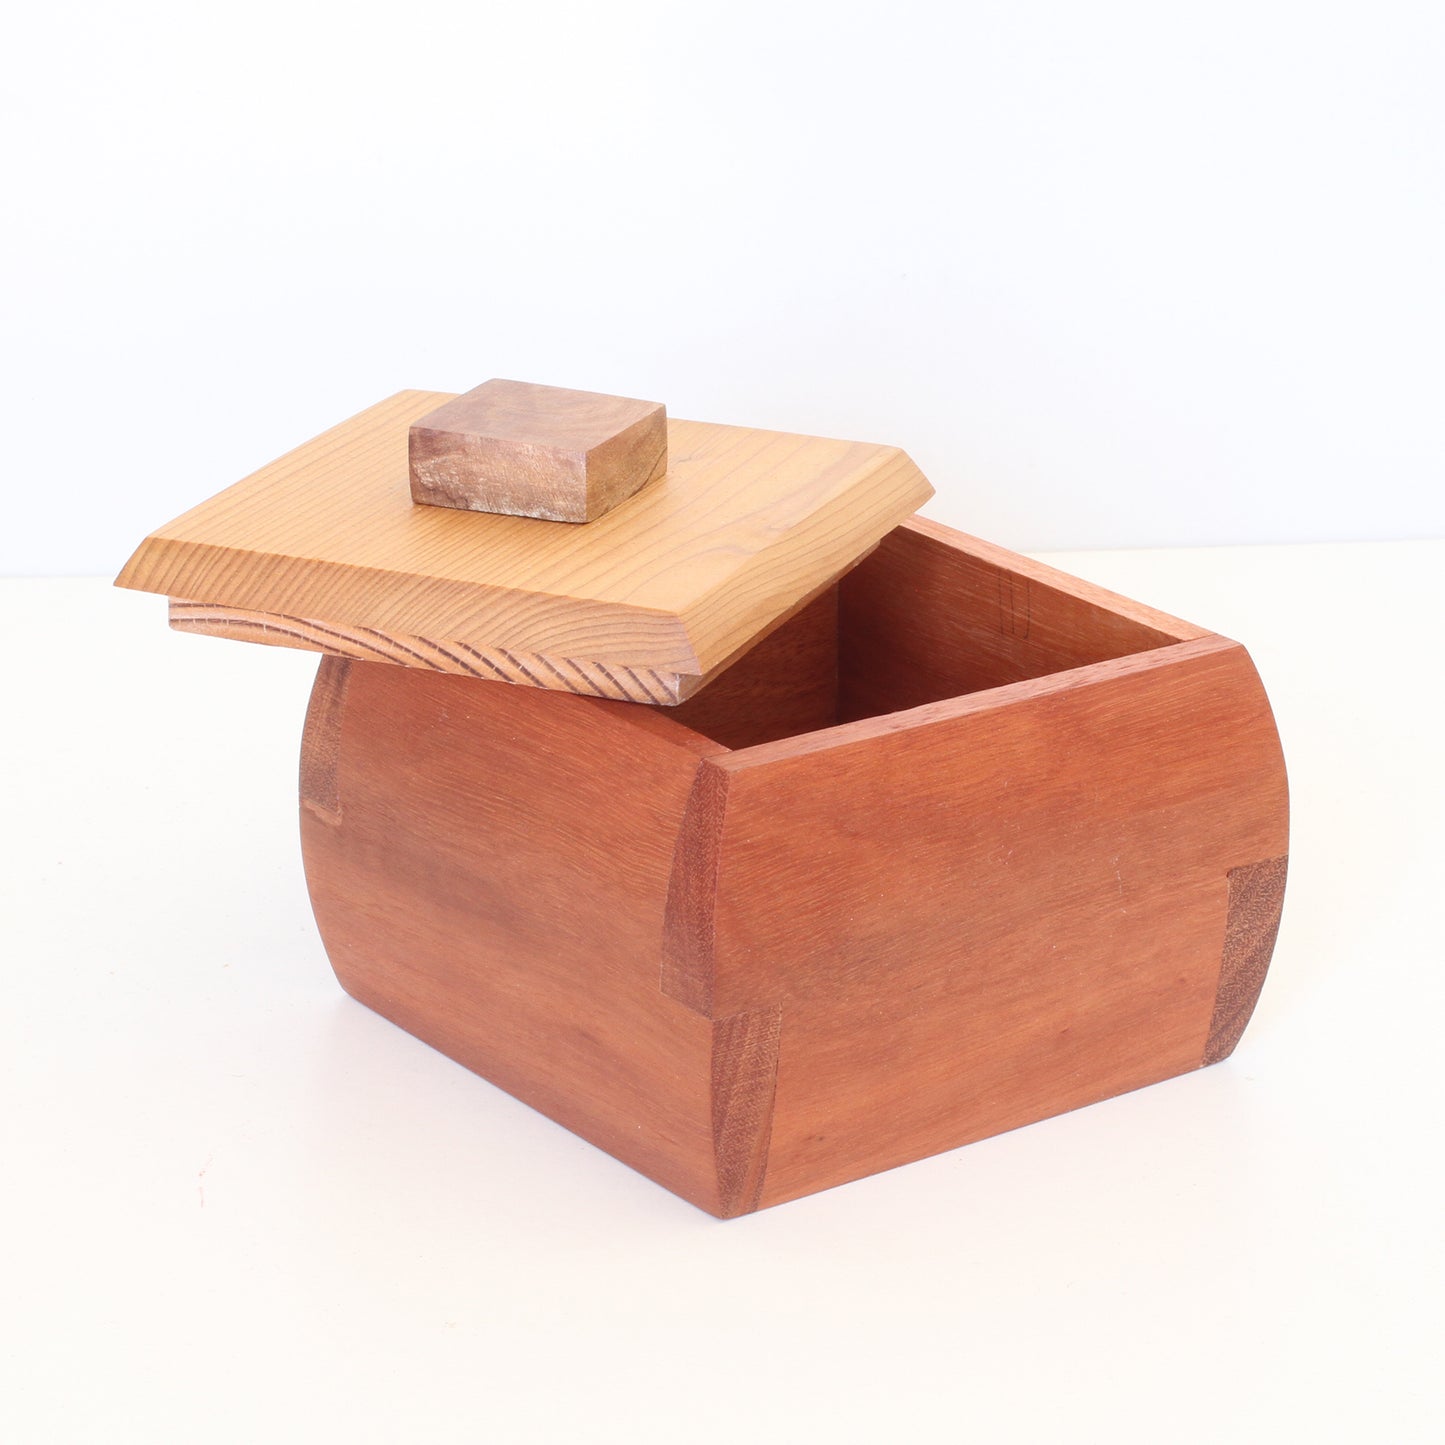 Handcrafted Wooden Keepsake Curved Square Box - Australian Timbers: Sassafras, Myrtle, Cedar